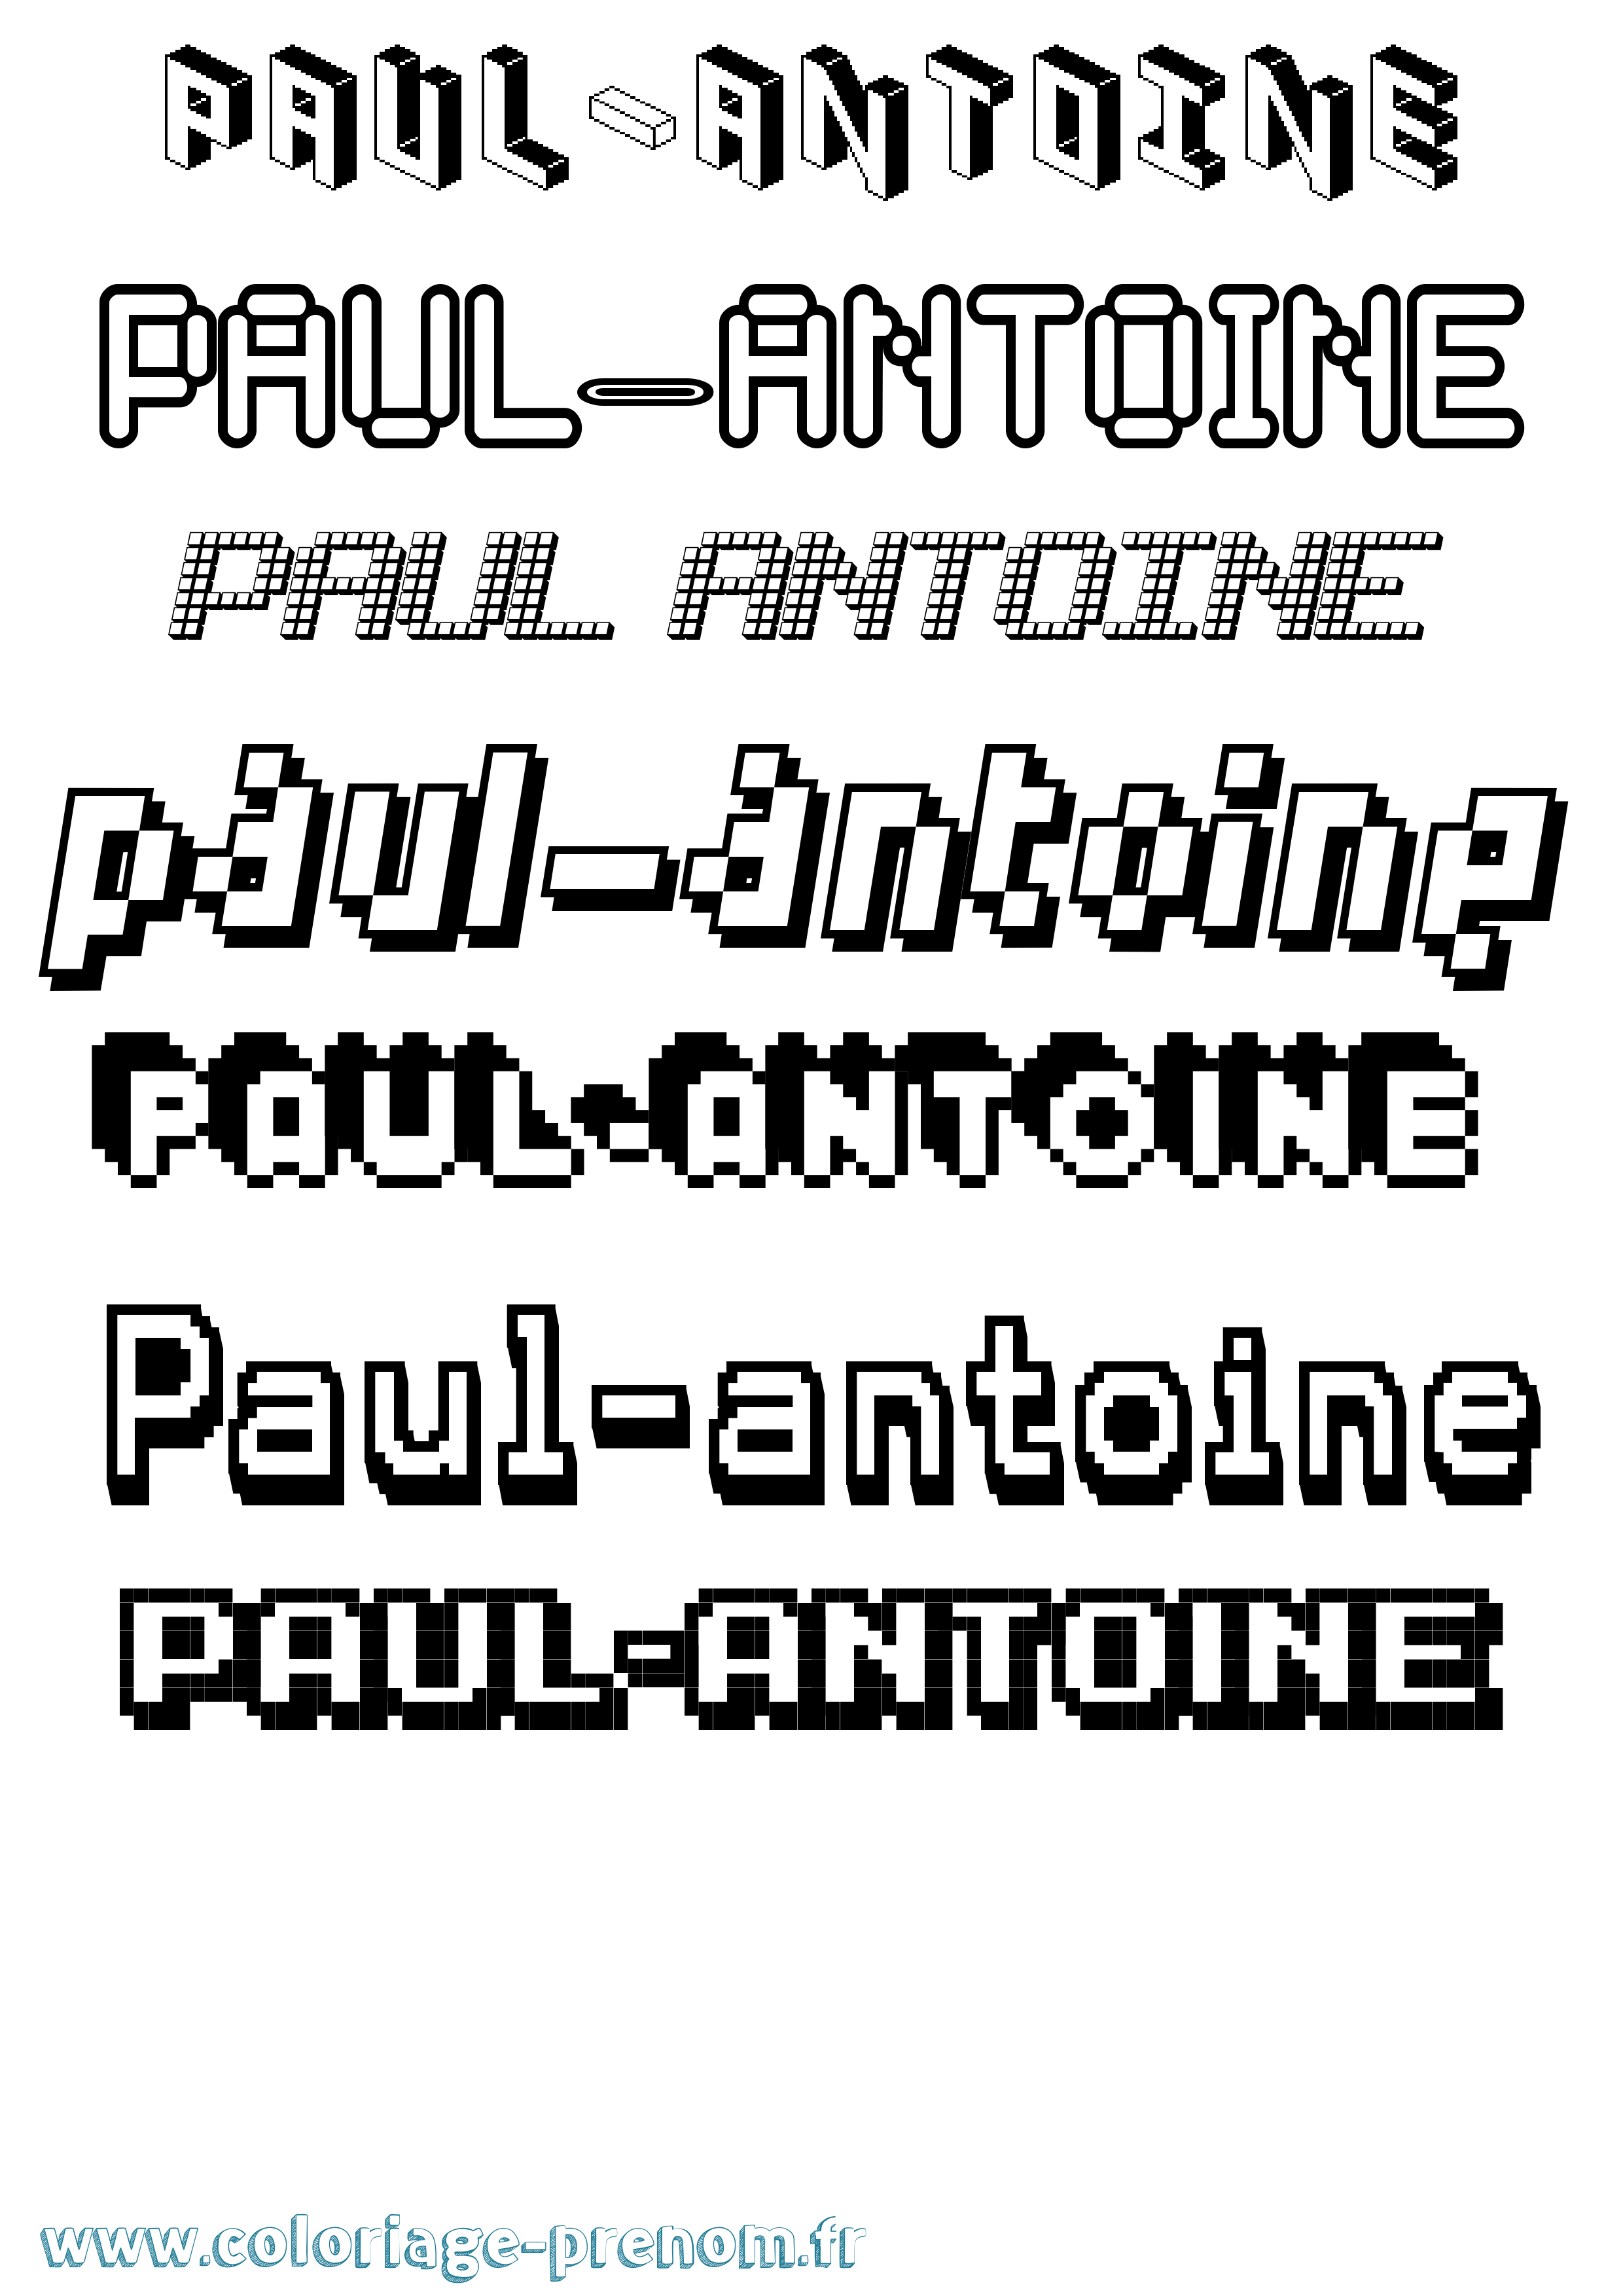 Coloriage prénom Paul-Antoine